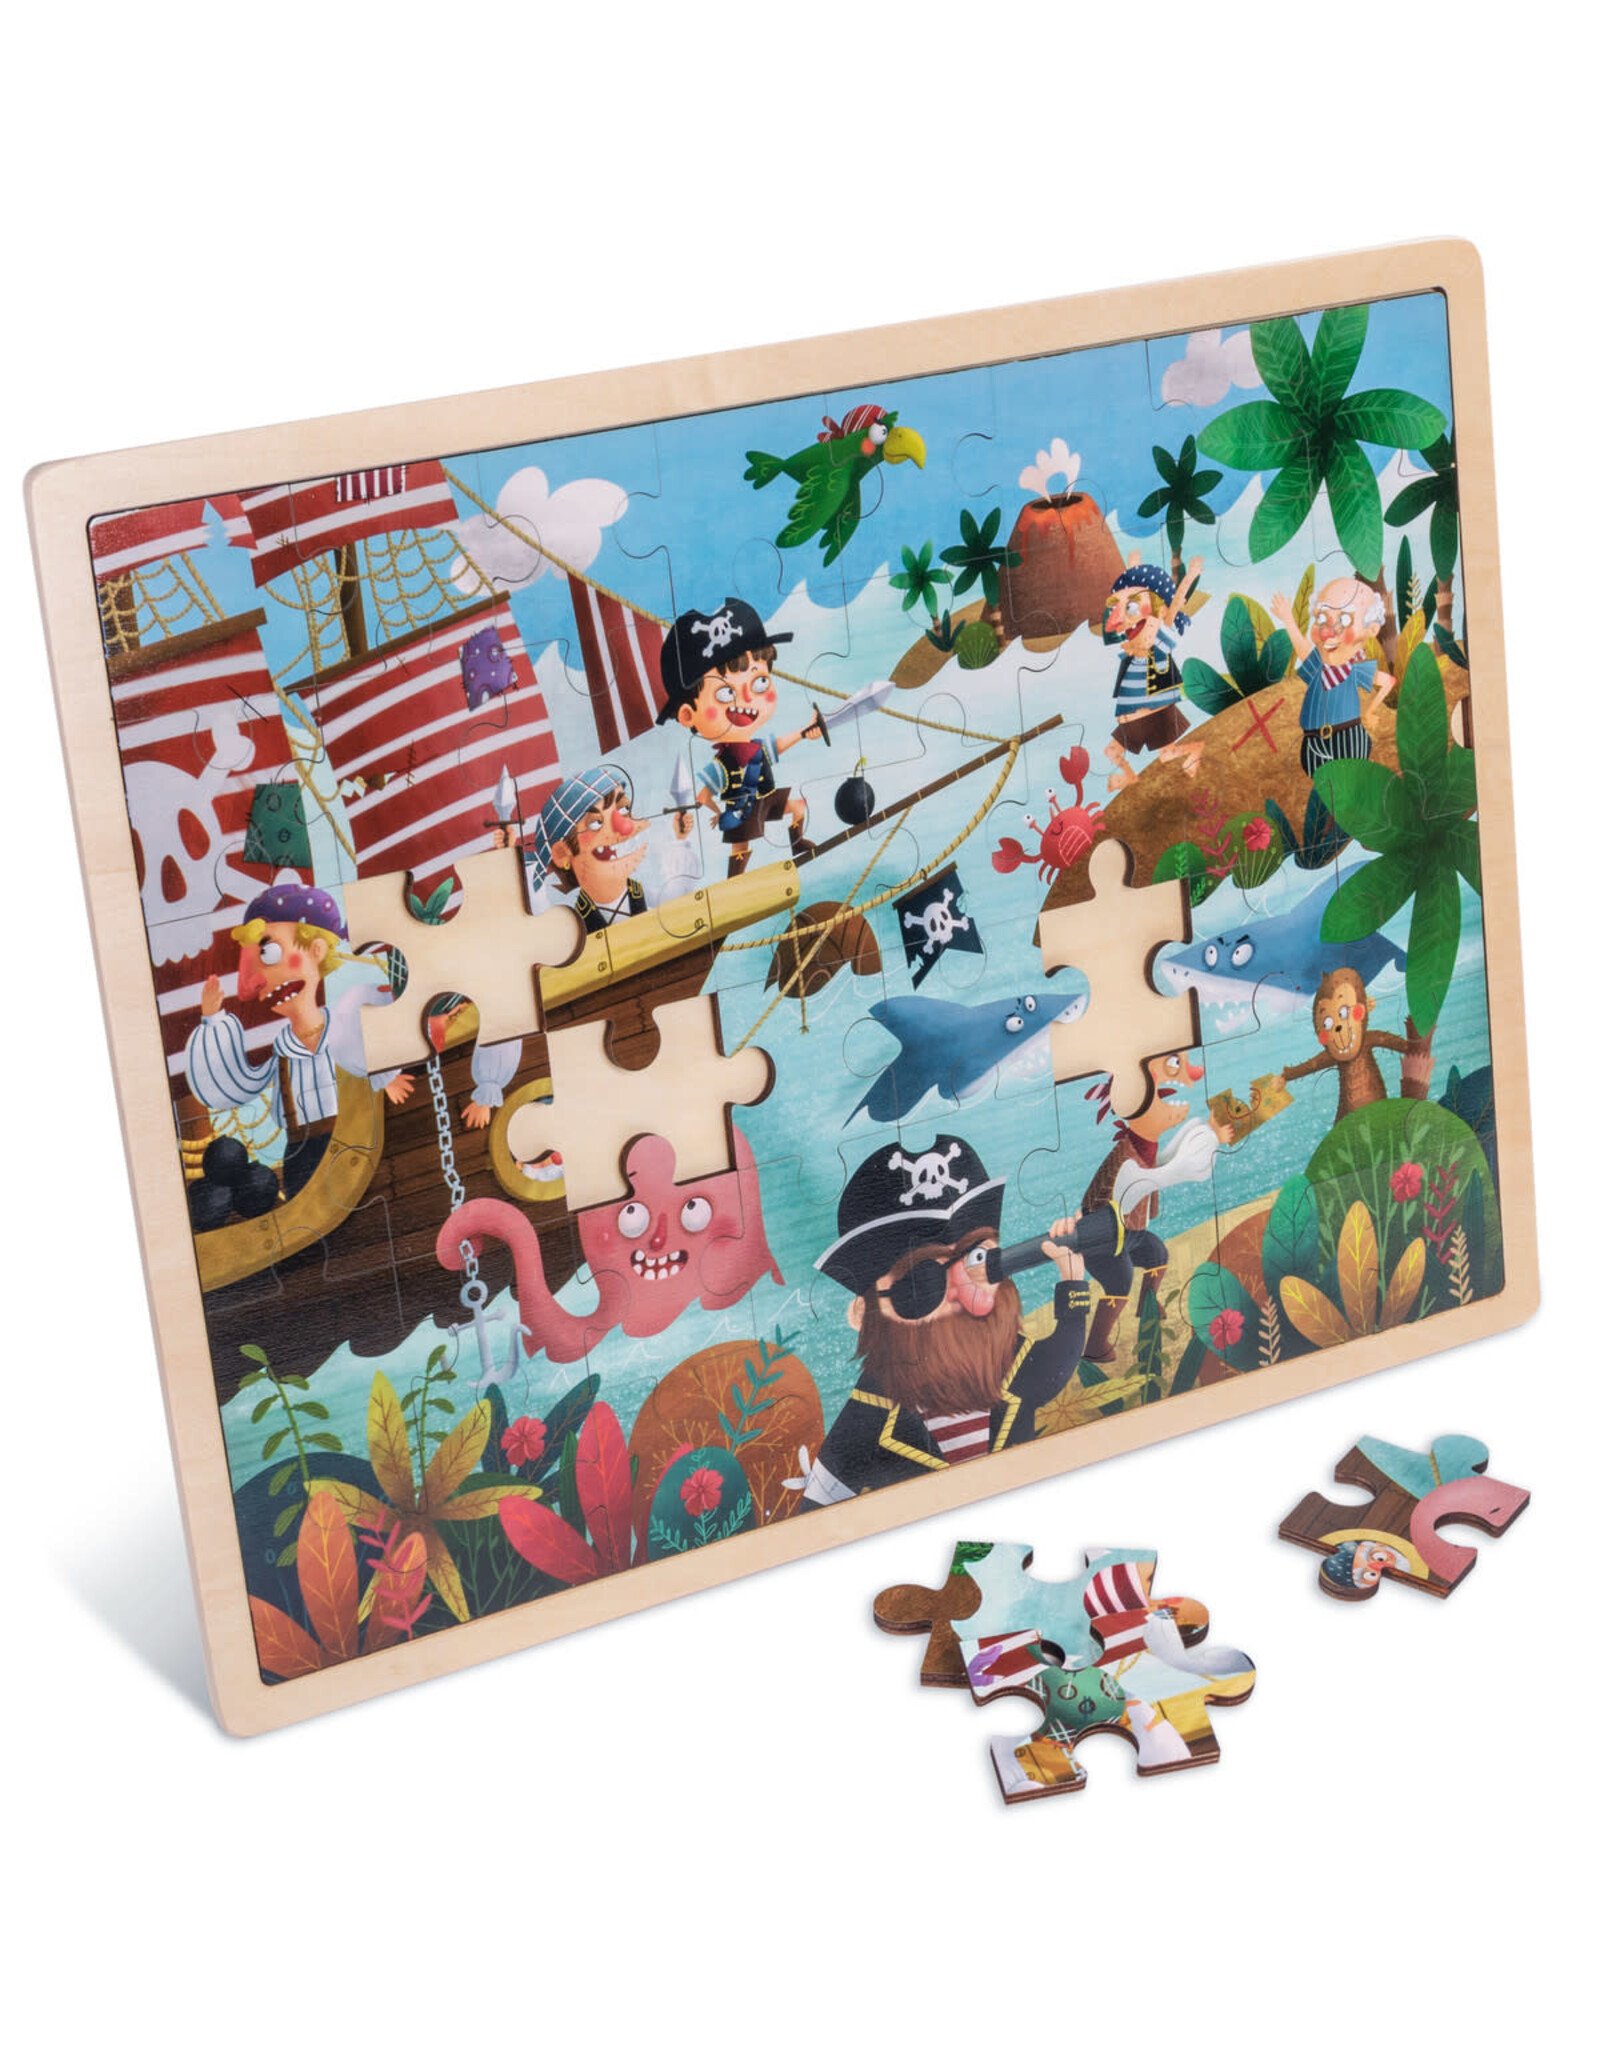 Imagination Generation Playful Pirate Ship Jigsaw 48 pc WoodenPuzzle